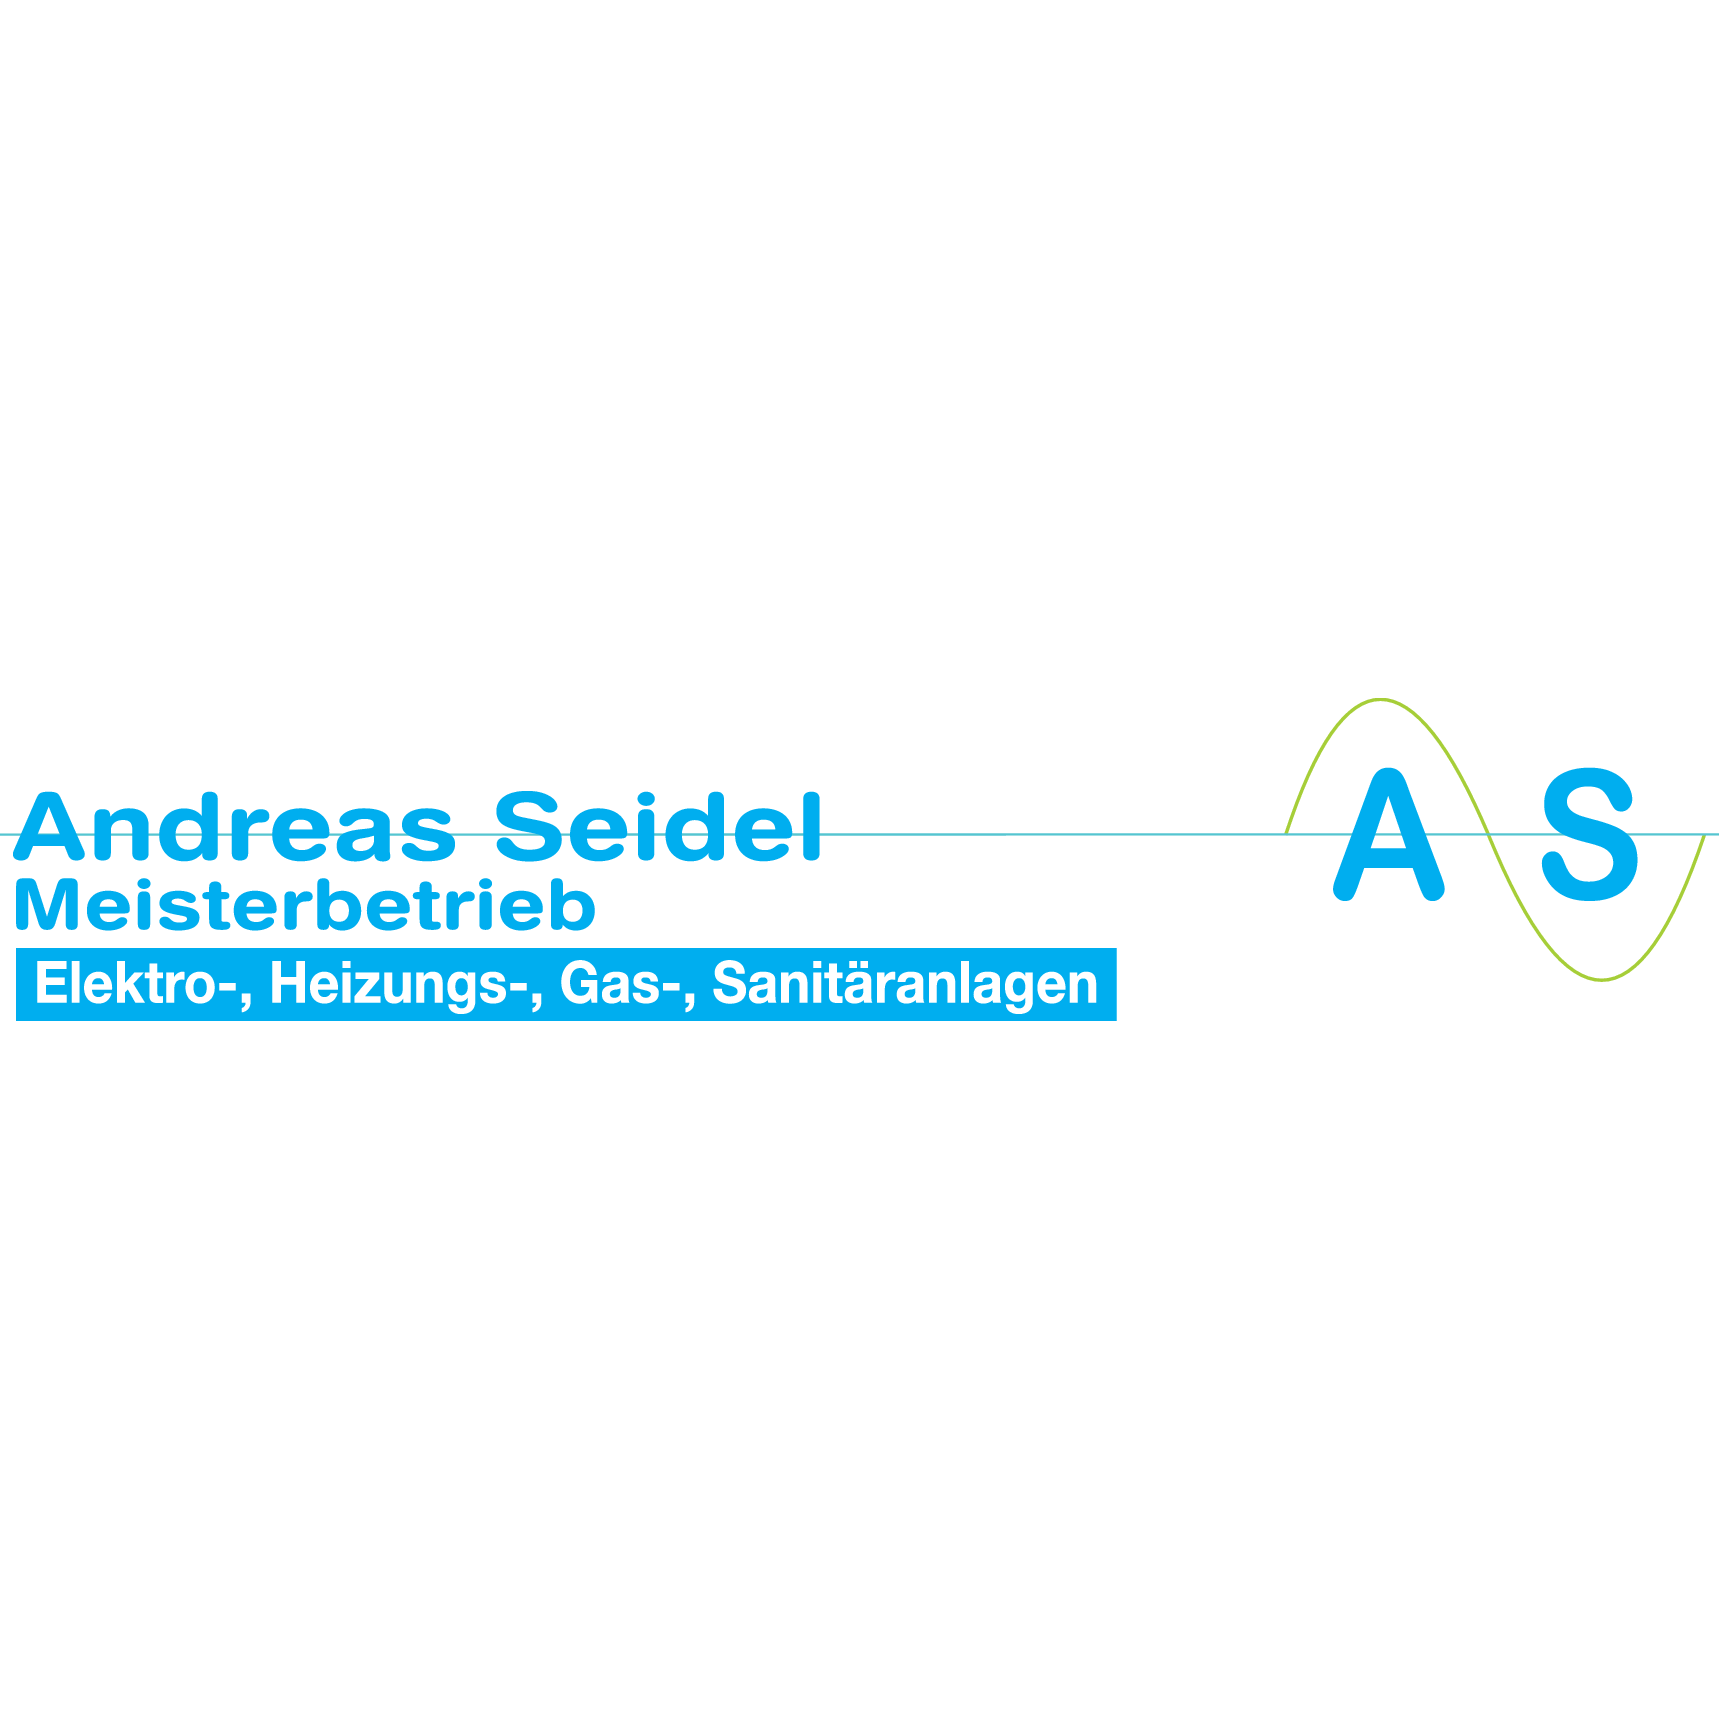 Seidel, Andreas in Berlin - Logo